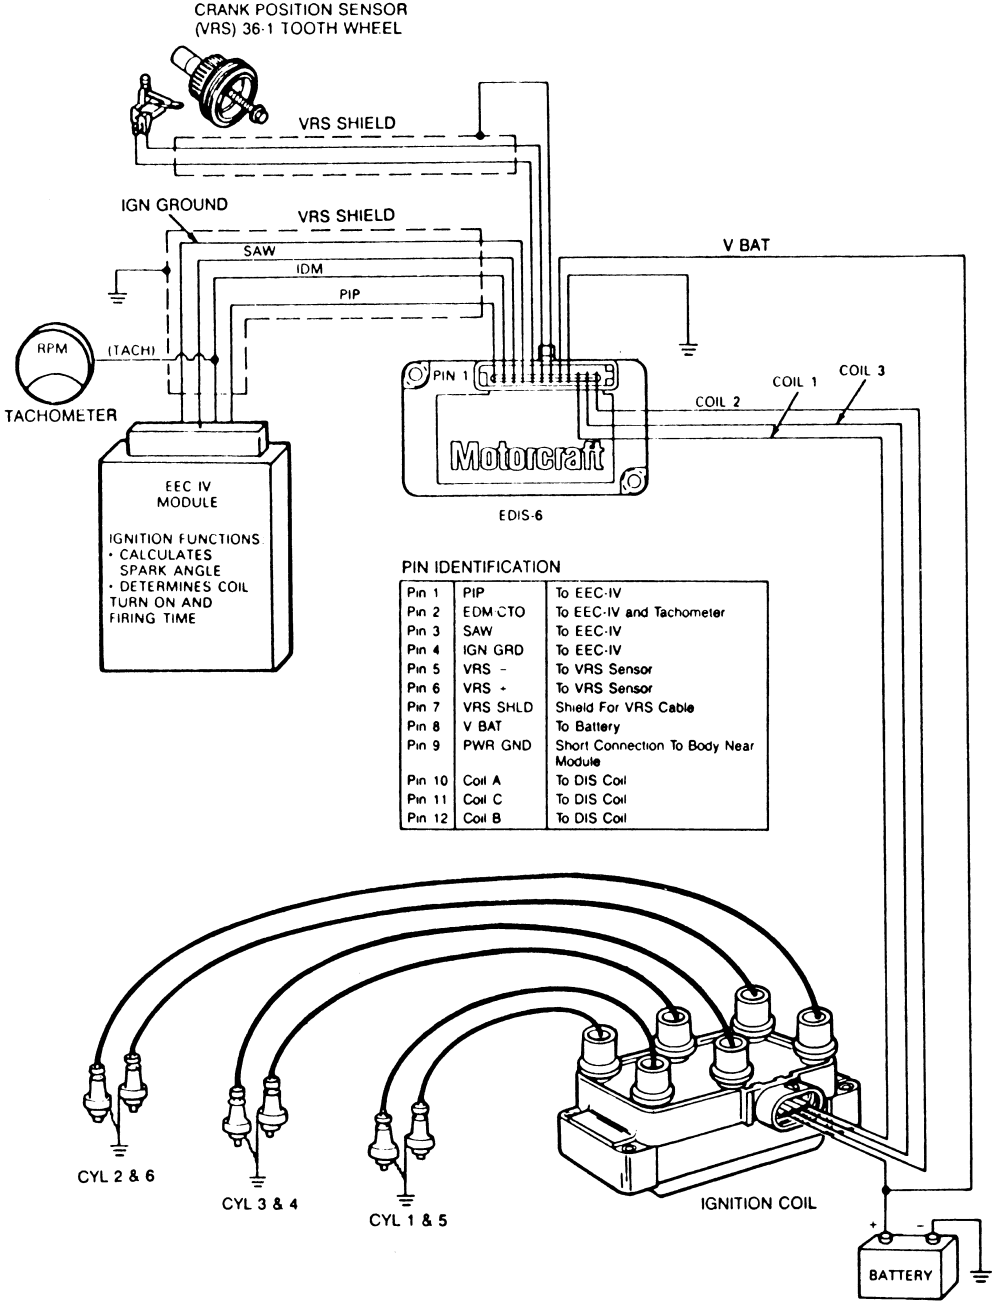 1997 Honda Accord Spark Plug Wiring Diagram from schematron.org